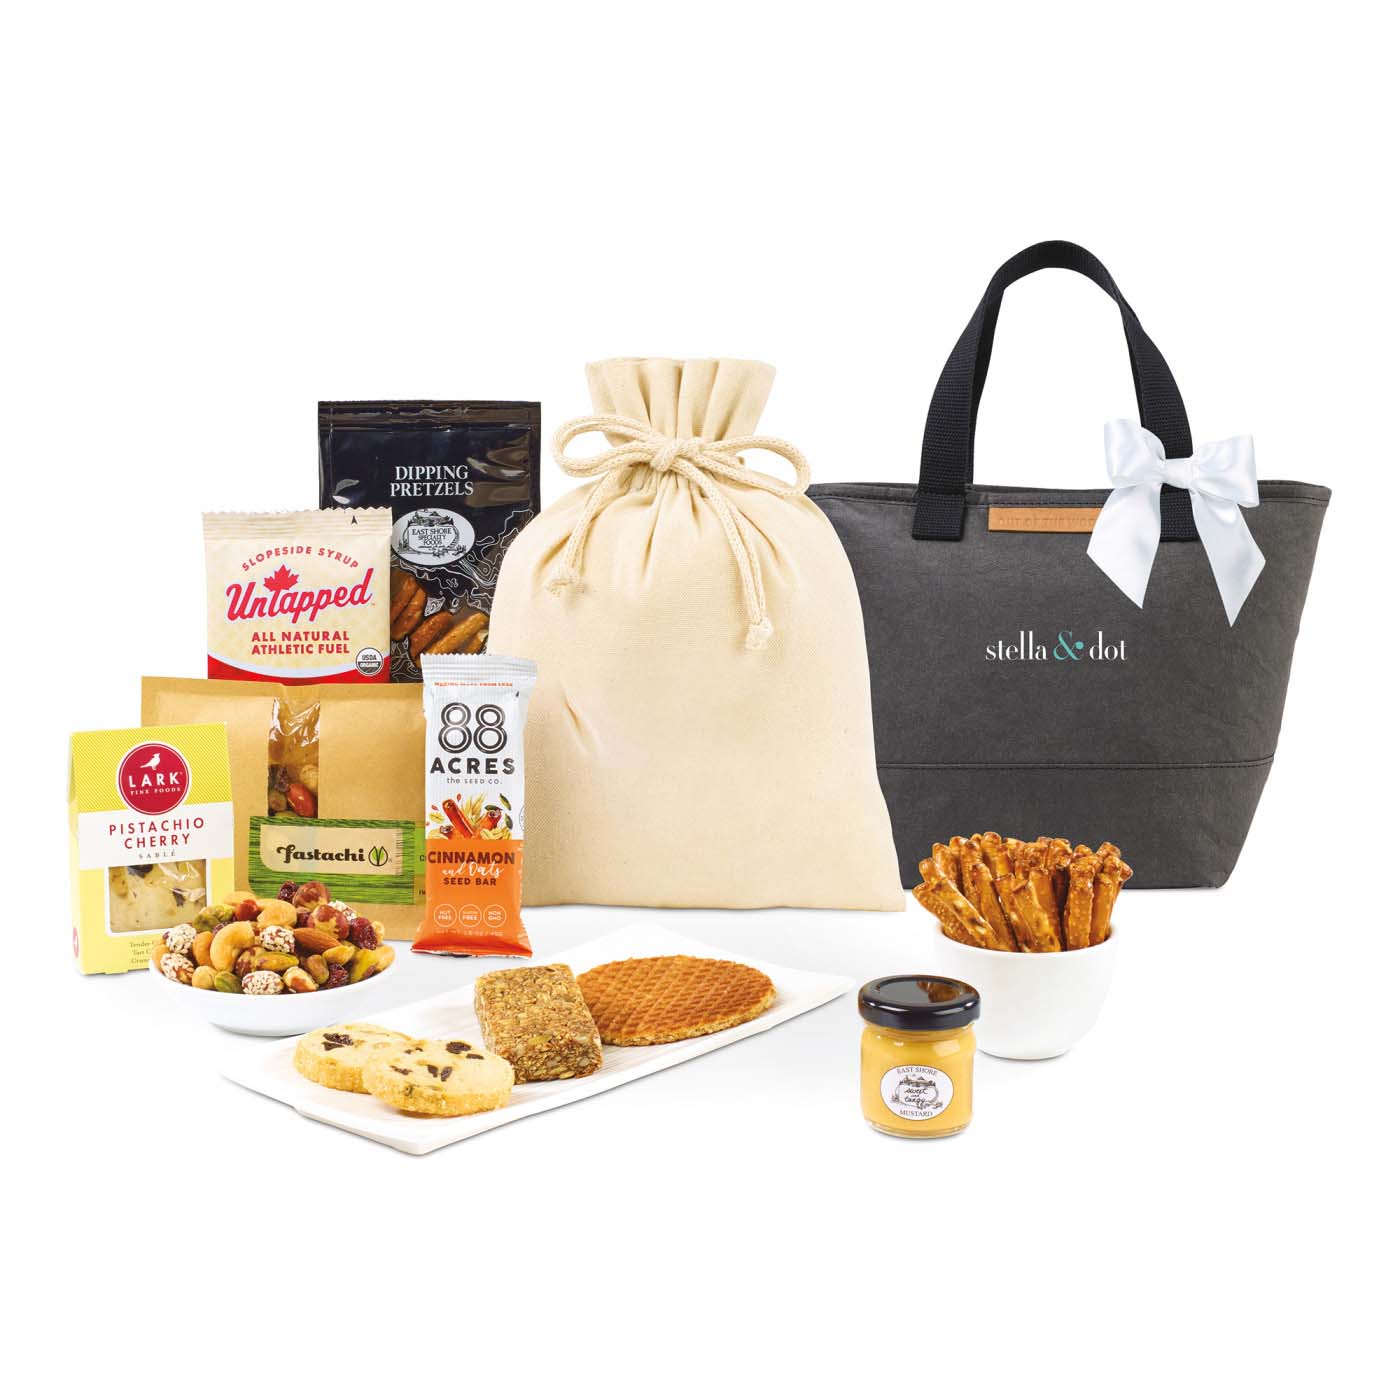 Gourmet Gift Basket to Switzerland - Send Hampers to Switzerland